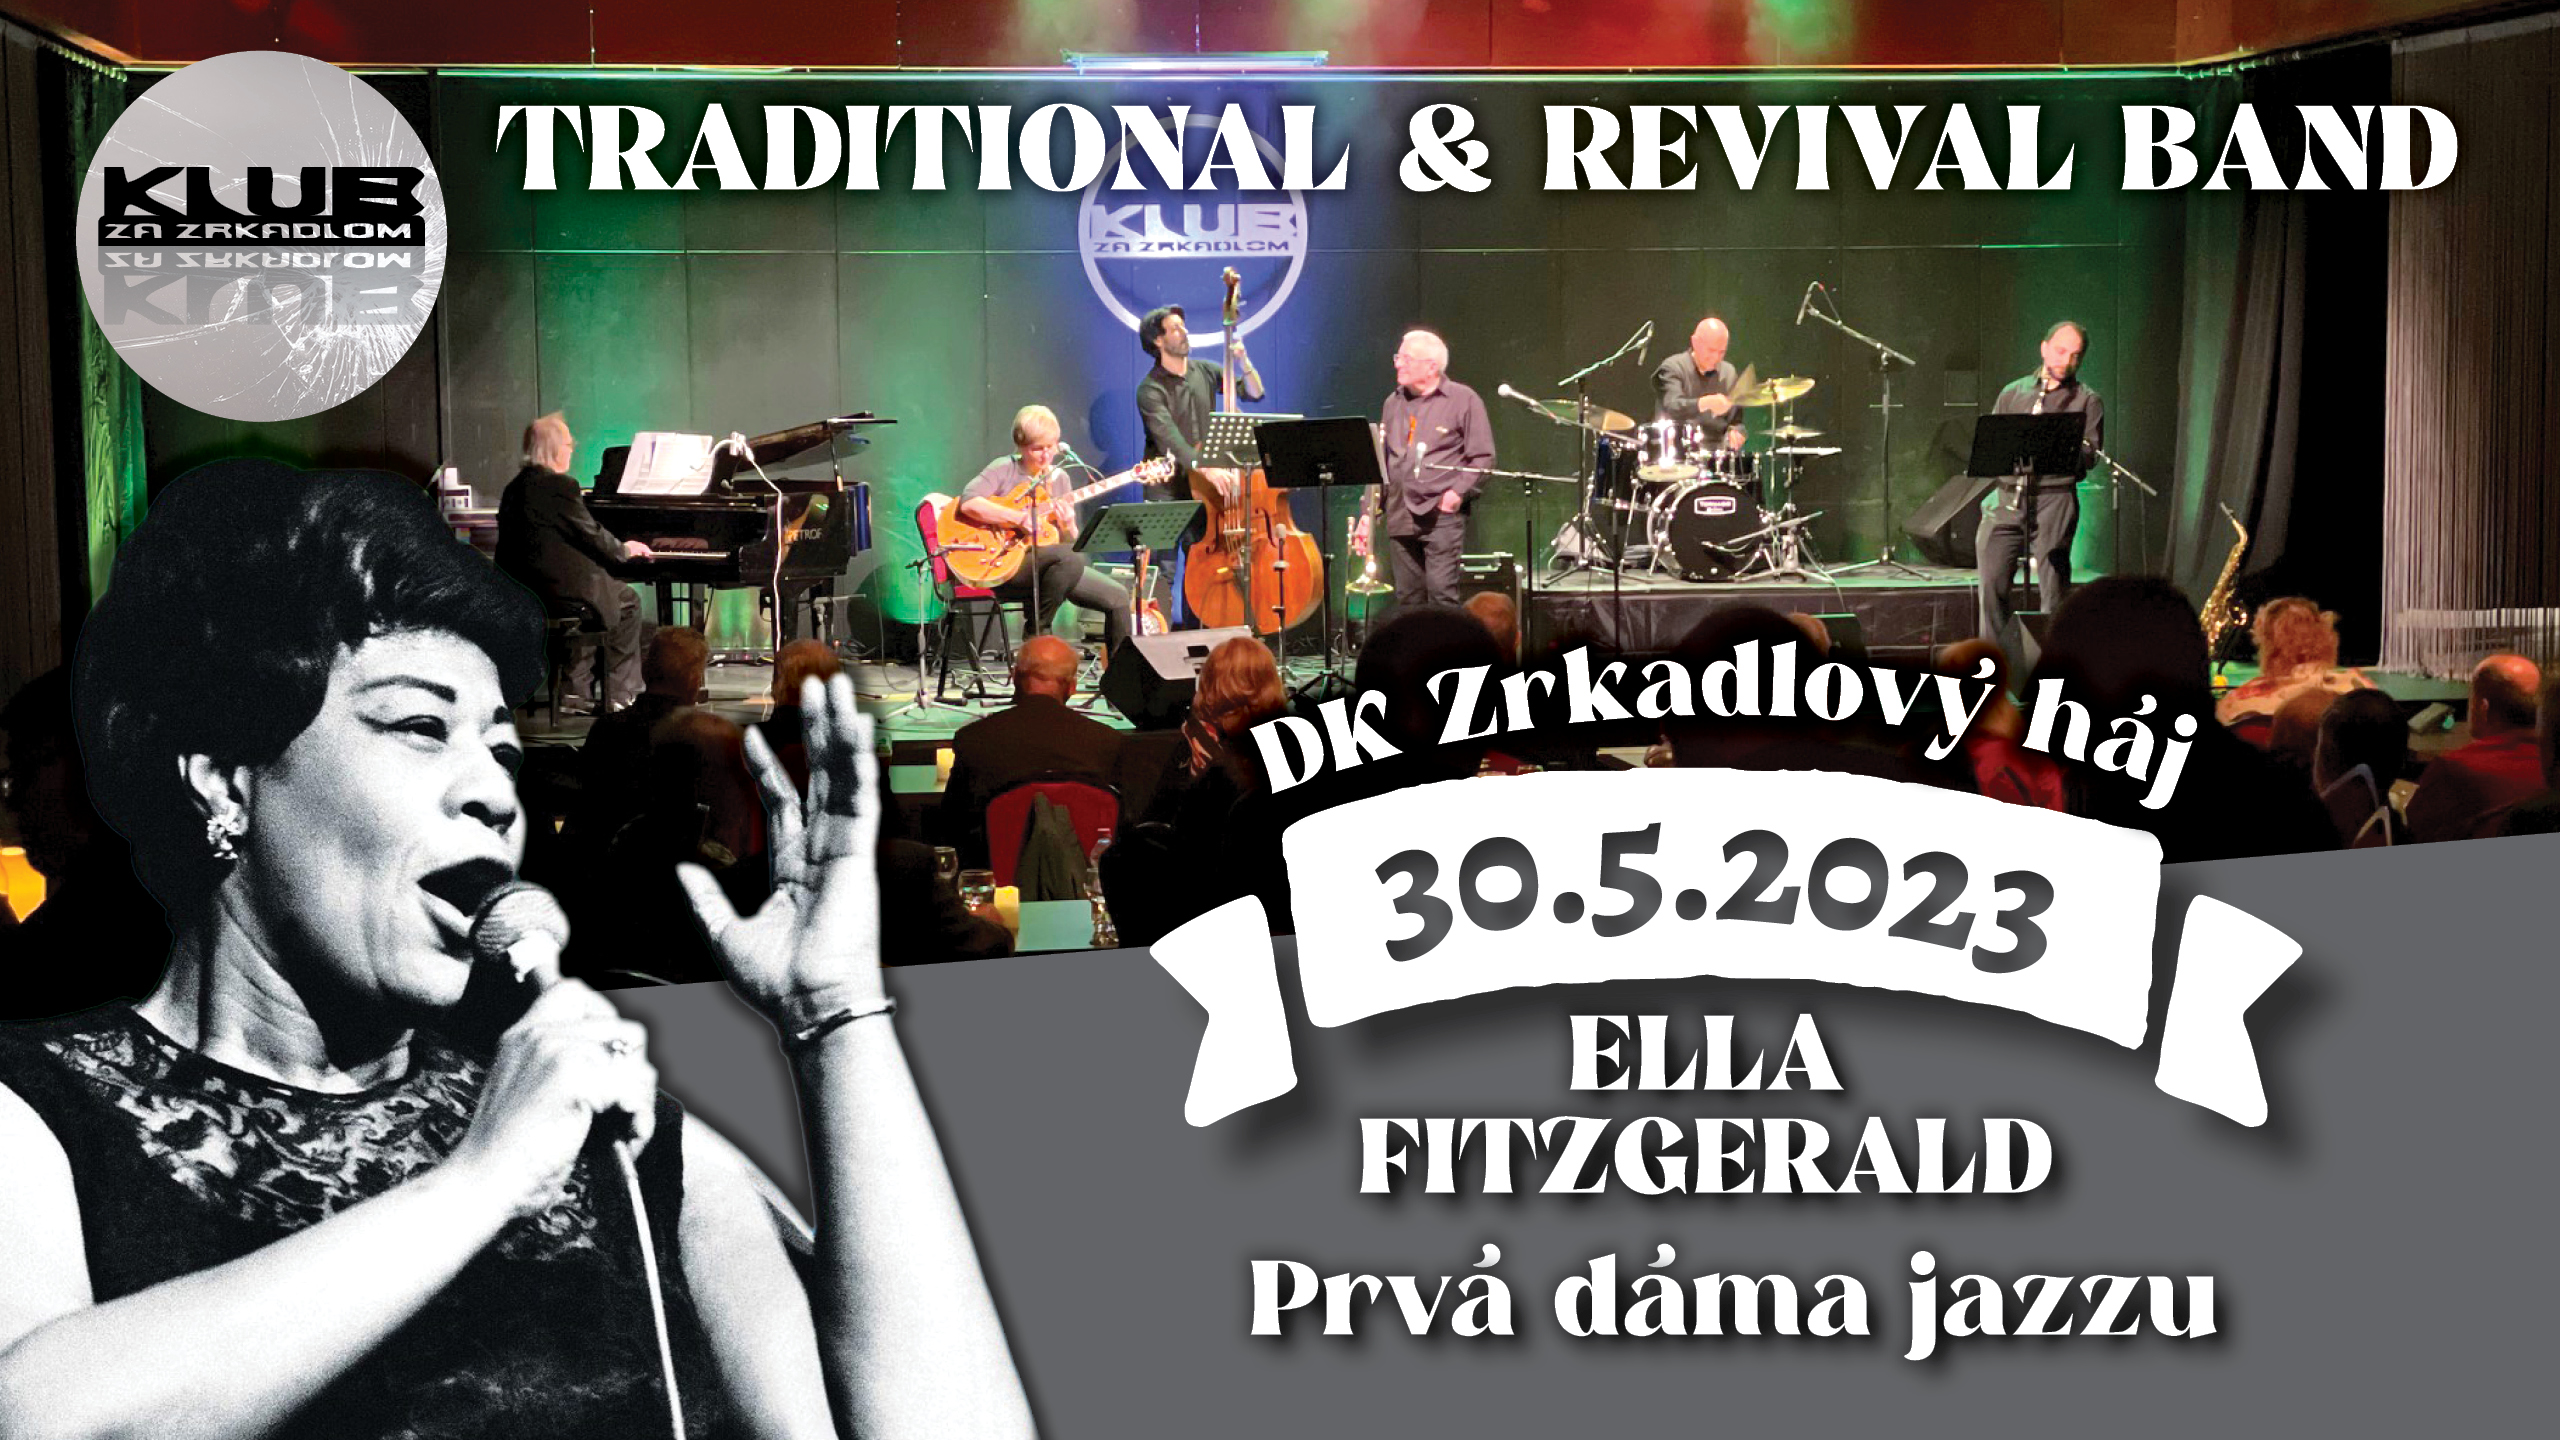 TRADITIONAL & REVIVAL BAND - prv dma jazzu Ella Fitzgerald 2023 Petralka